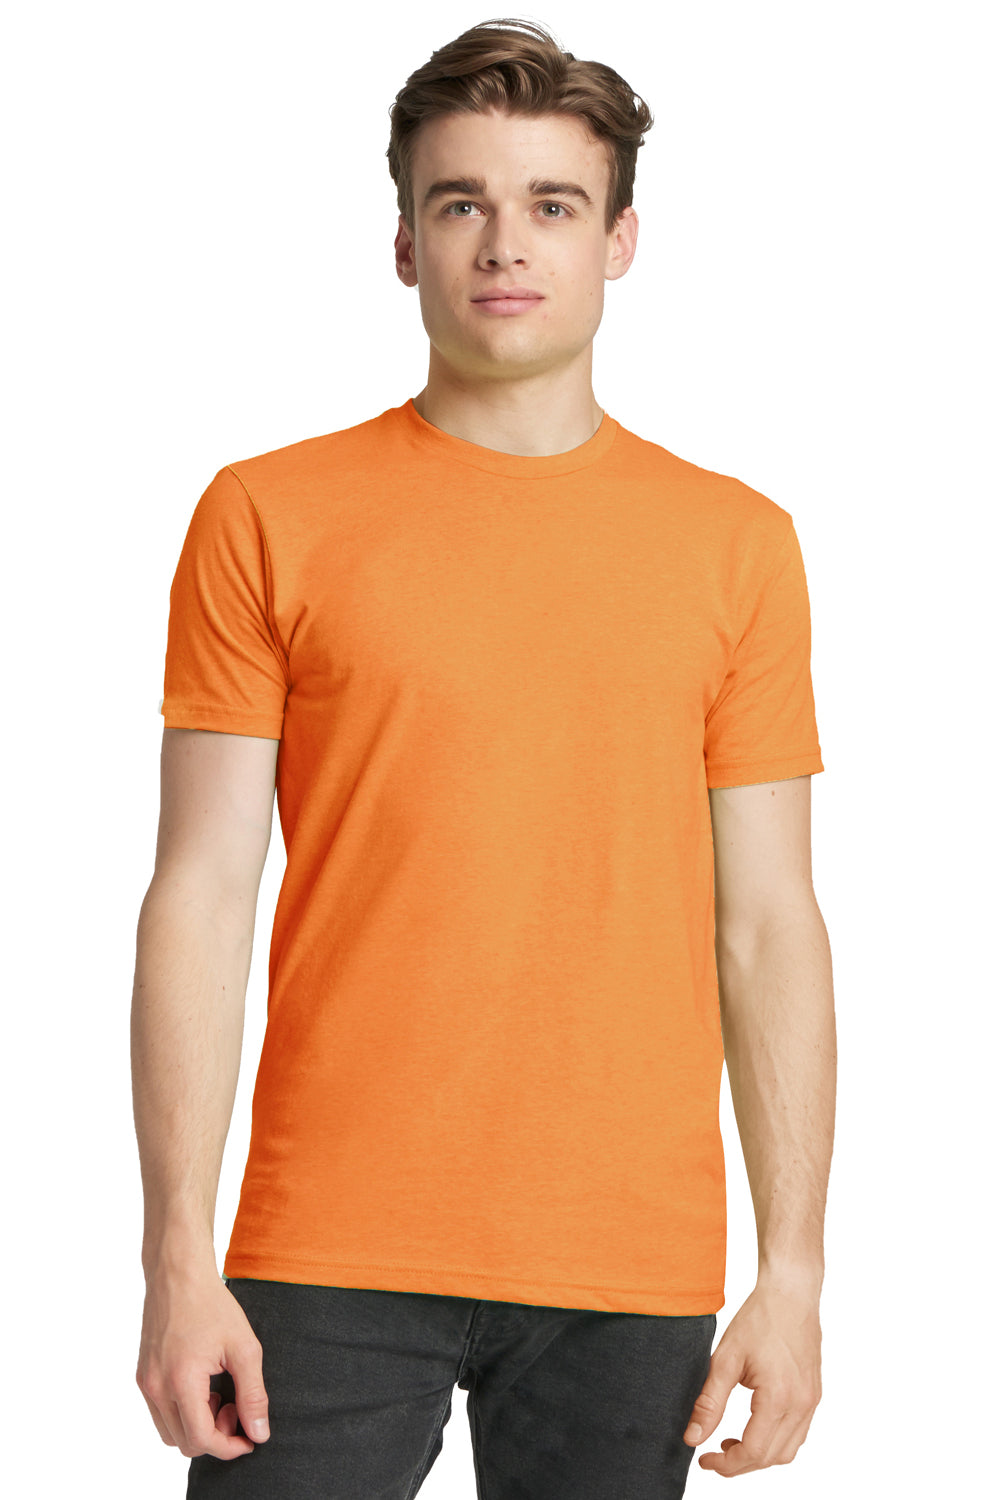 Next Level N6210 Mens CVC Jersey Short Sleeve Crewneck T-Shirt Orange Front